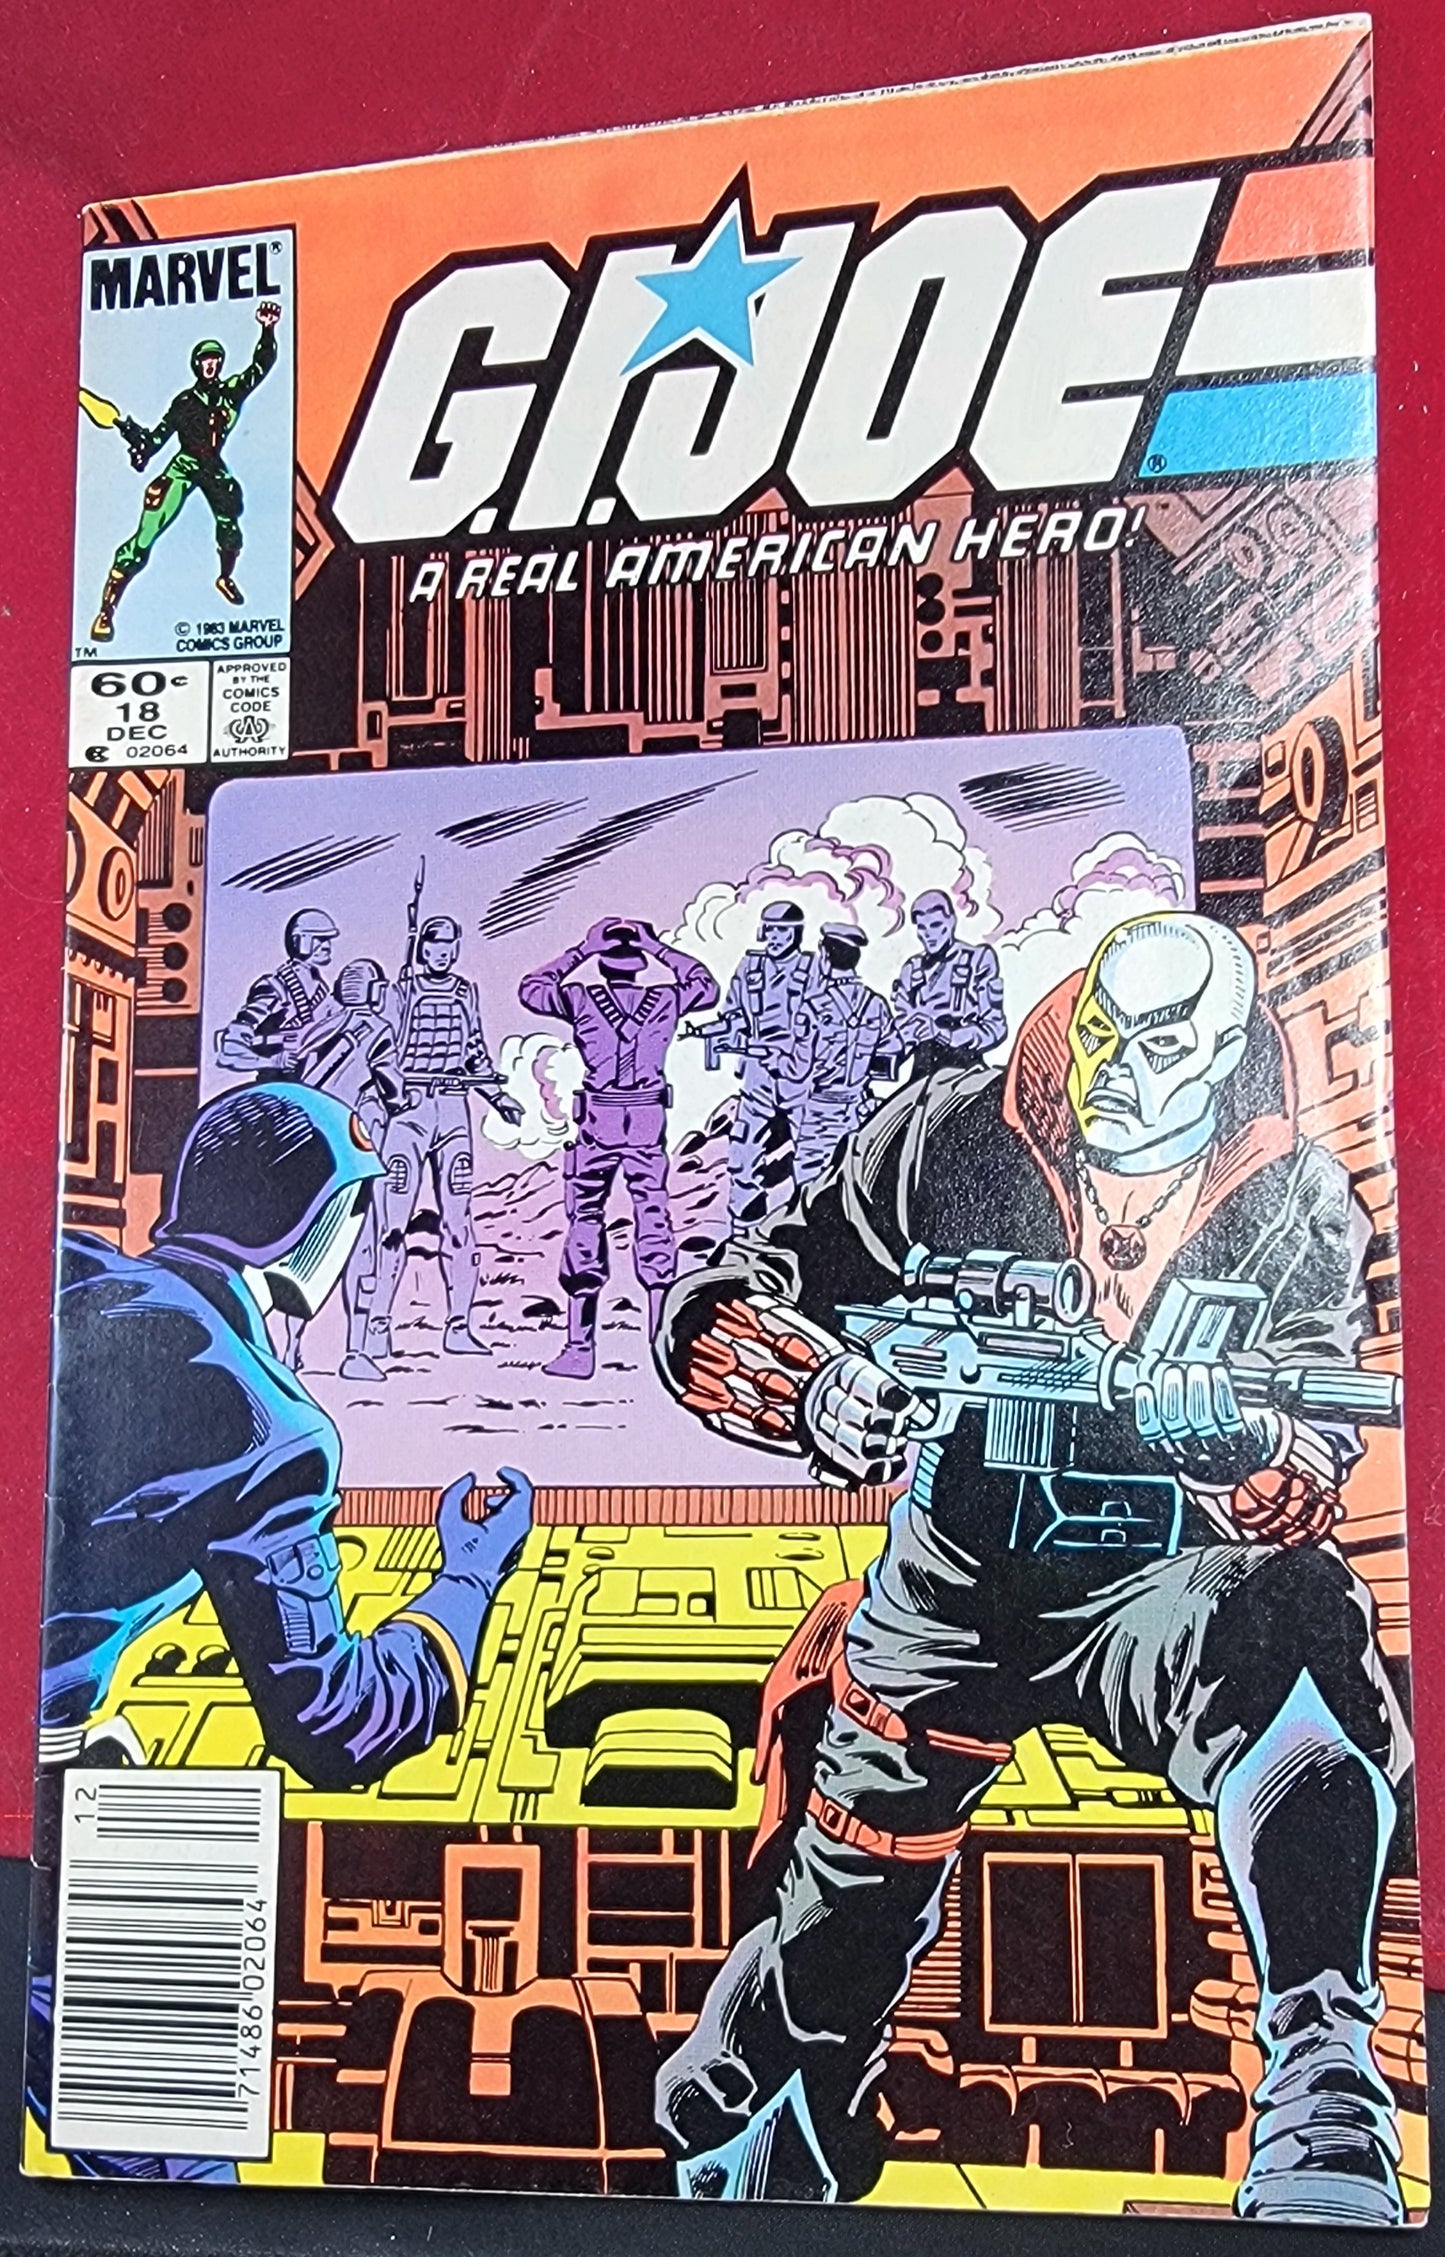 G.i.joe comic volume 1 issue 18 Dec 1983